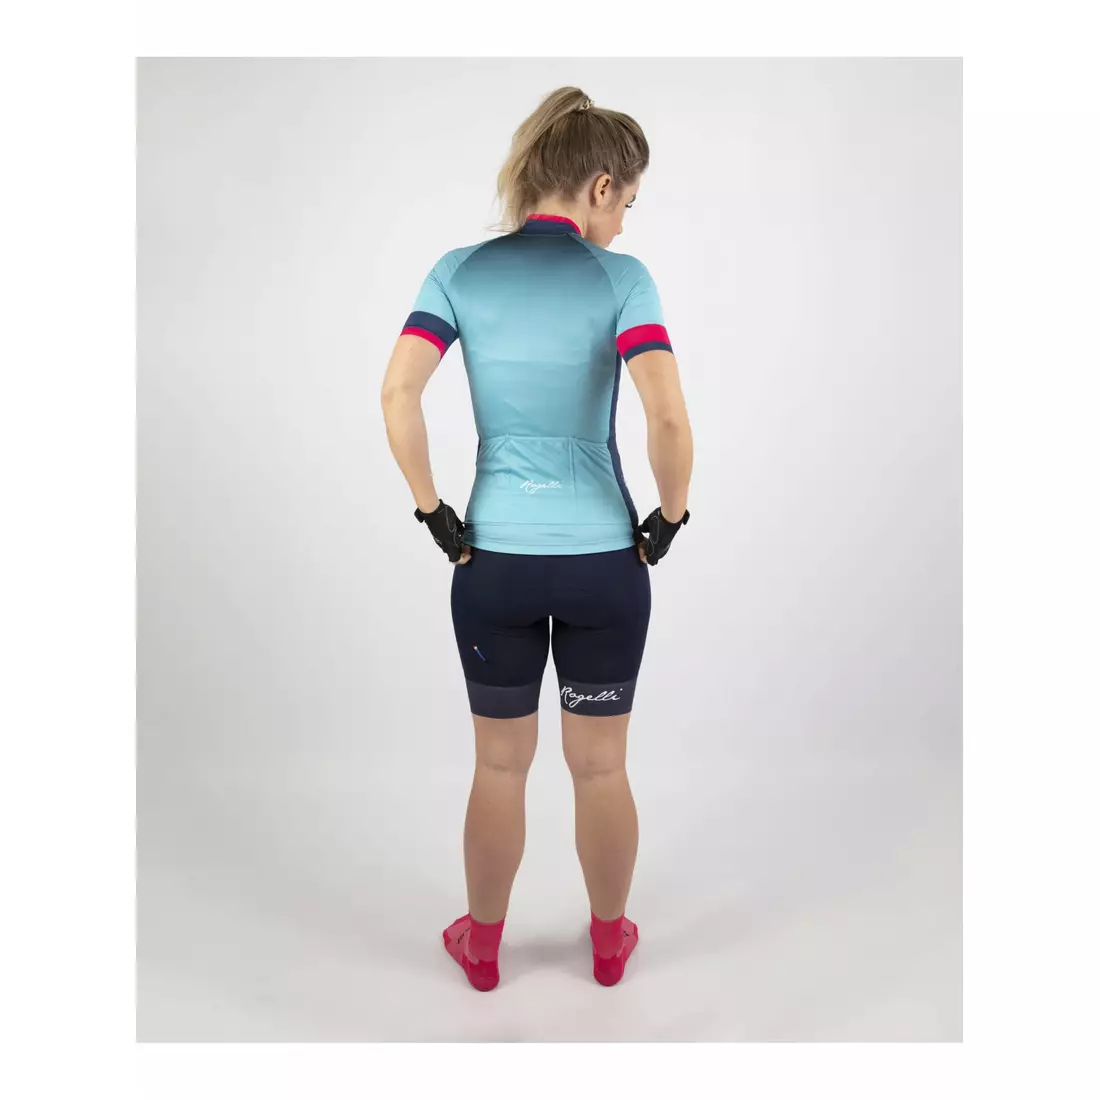 ROGELLI SELECT women's navy blue cycling shorts